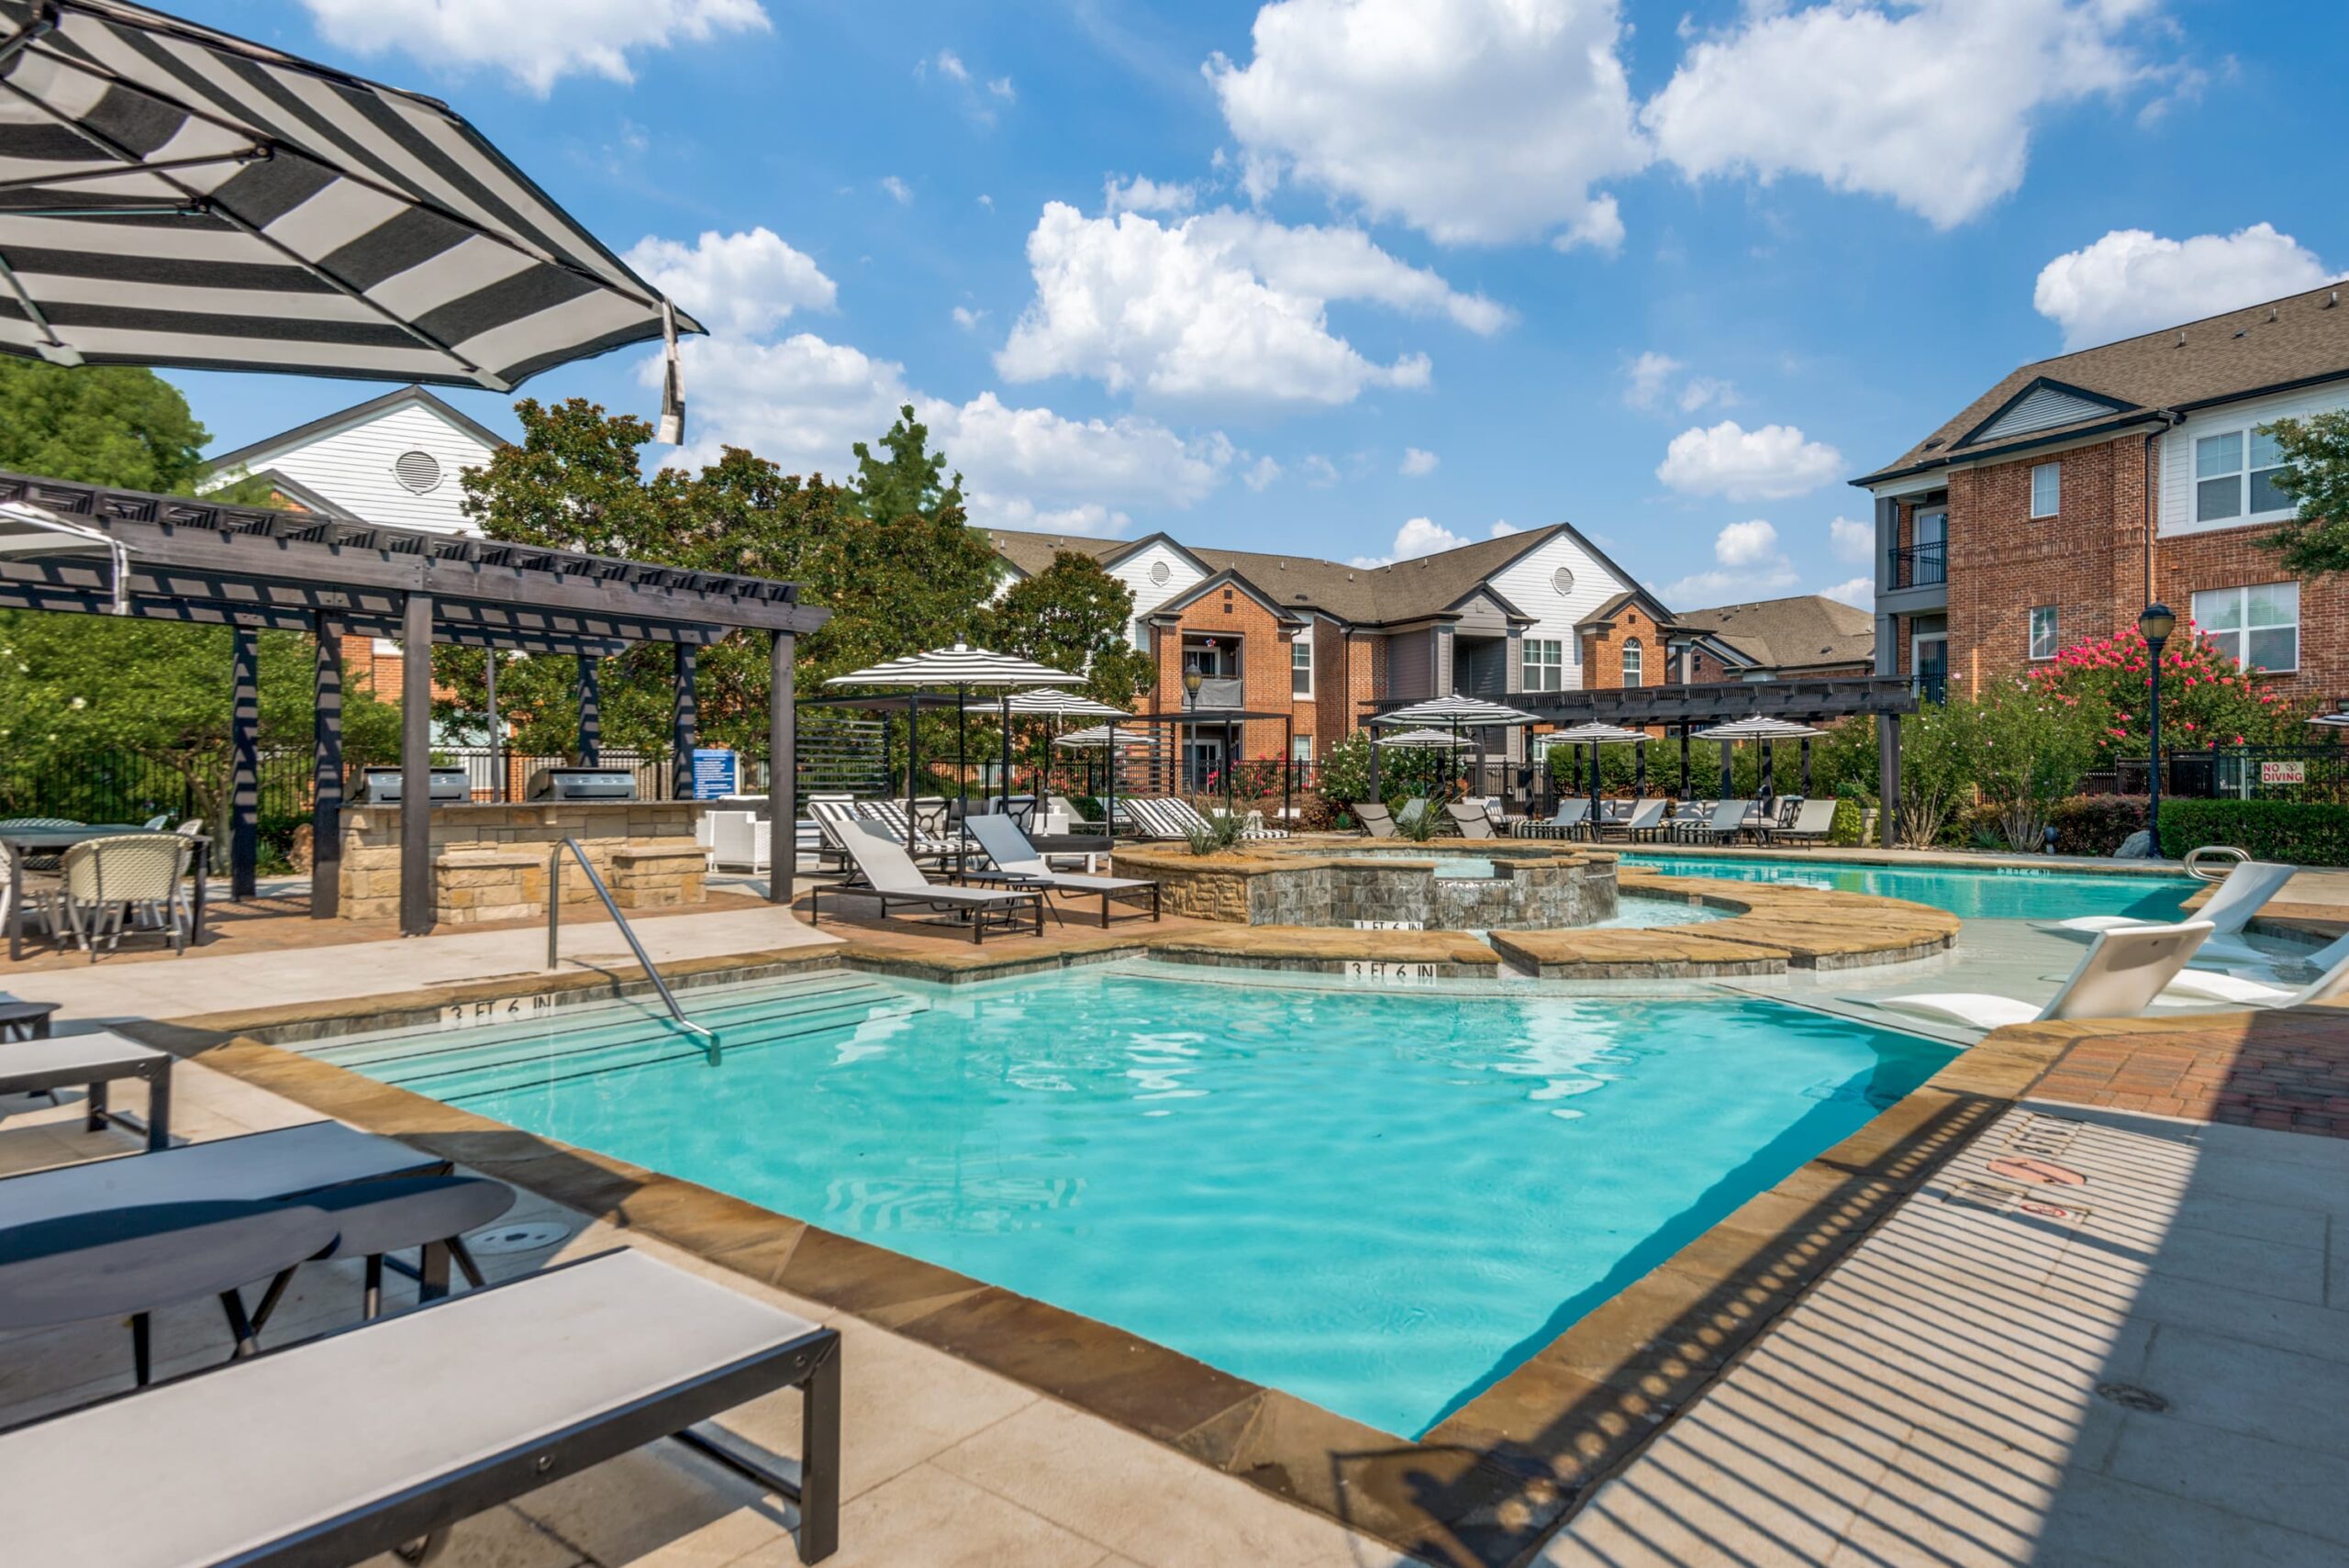 Luxury resort-style swimming pool